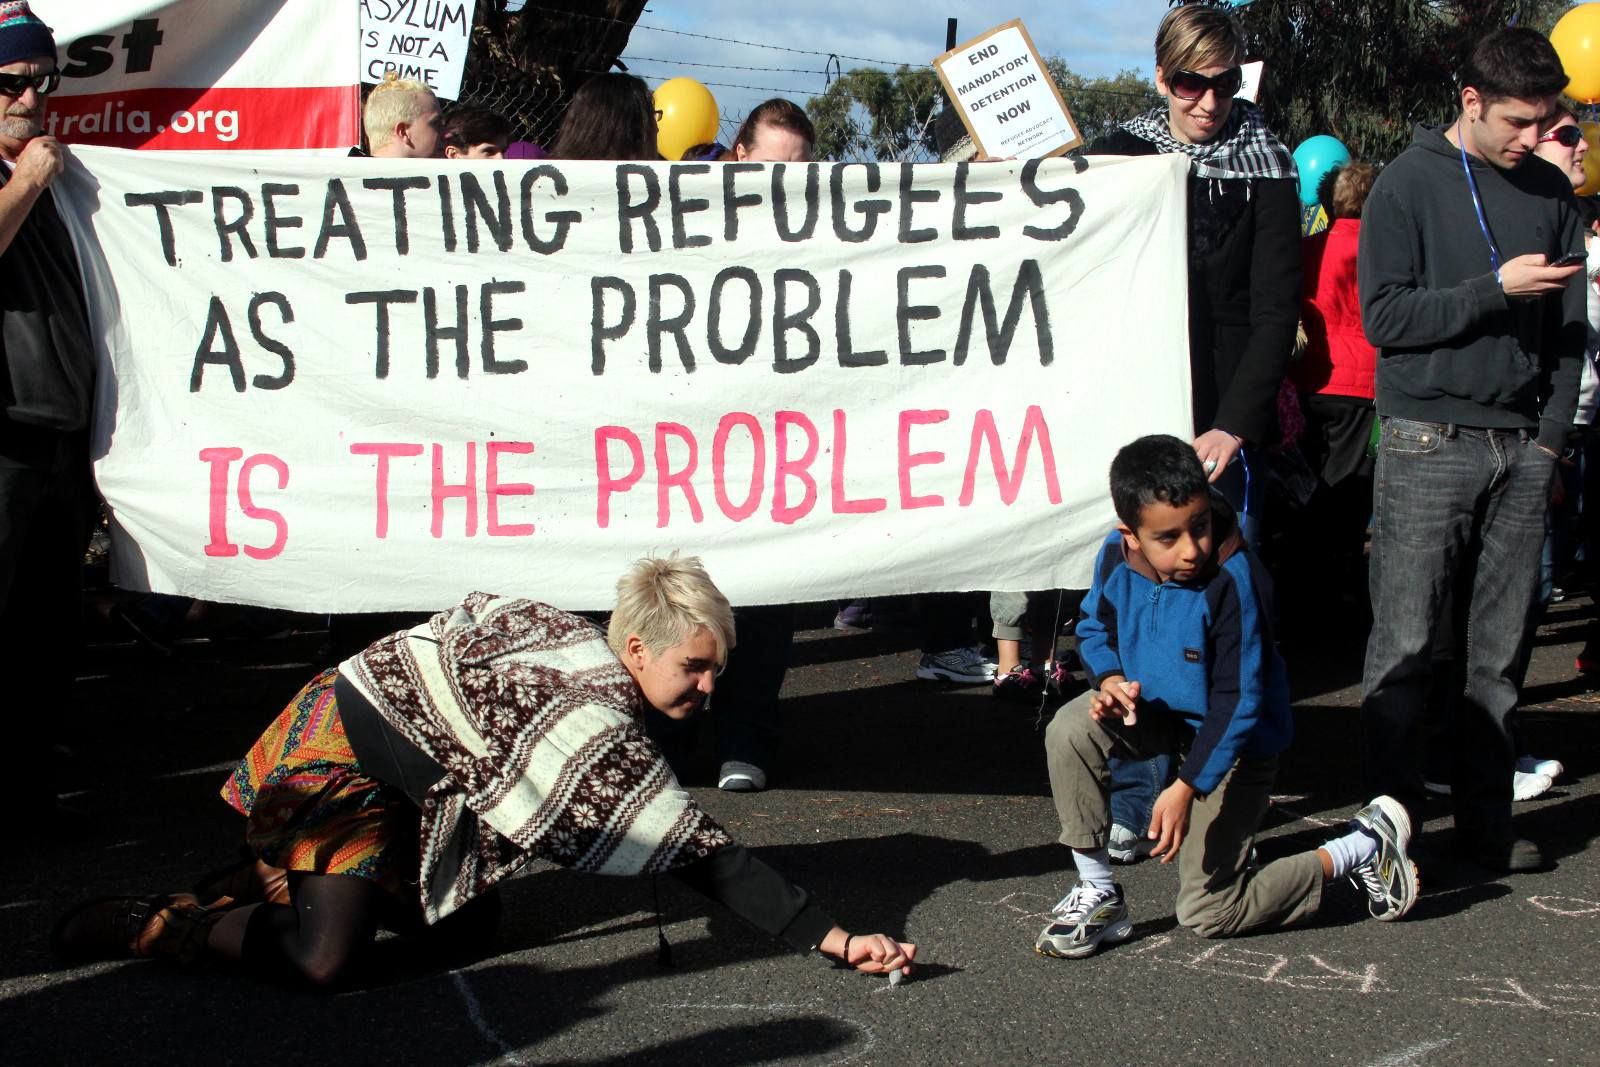 Dansk Folkeparti to copy Australian anti-refugee video